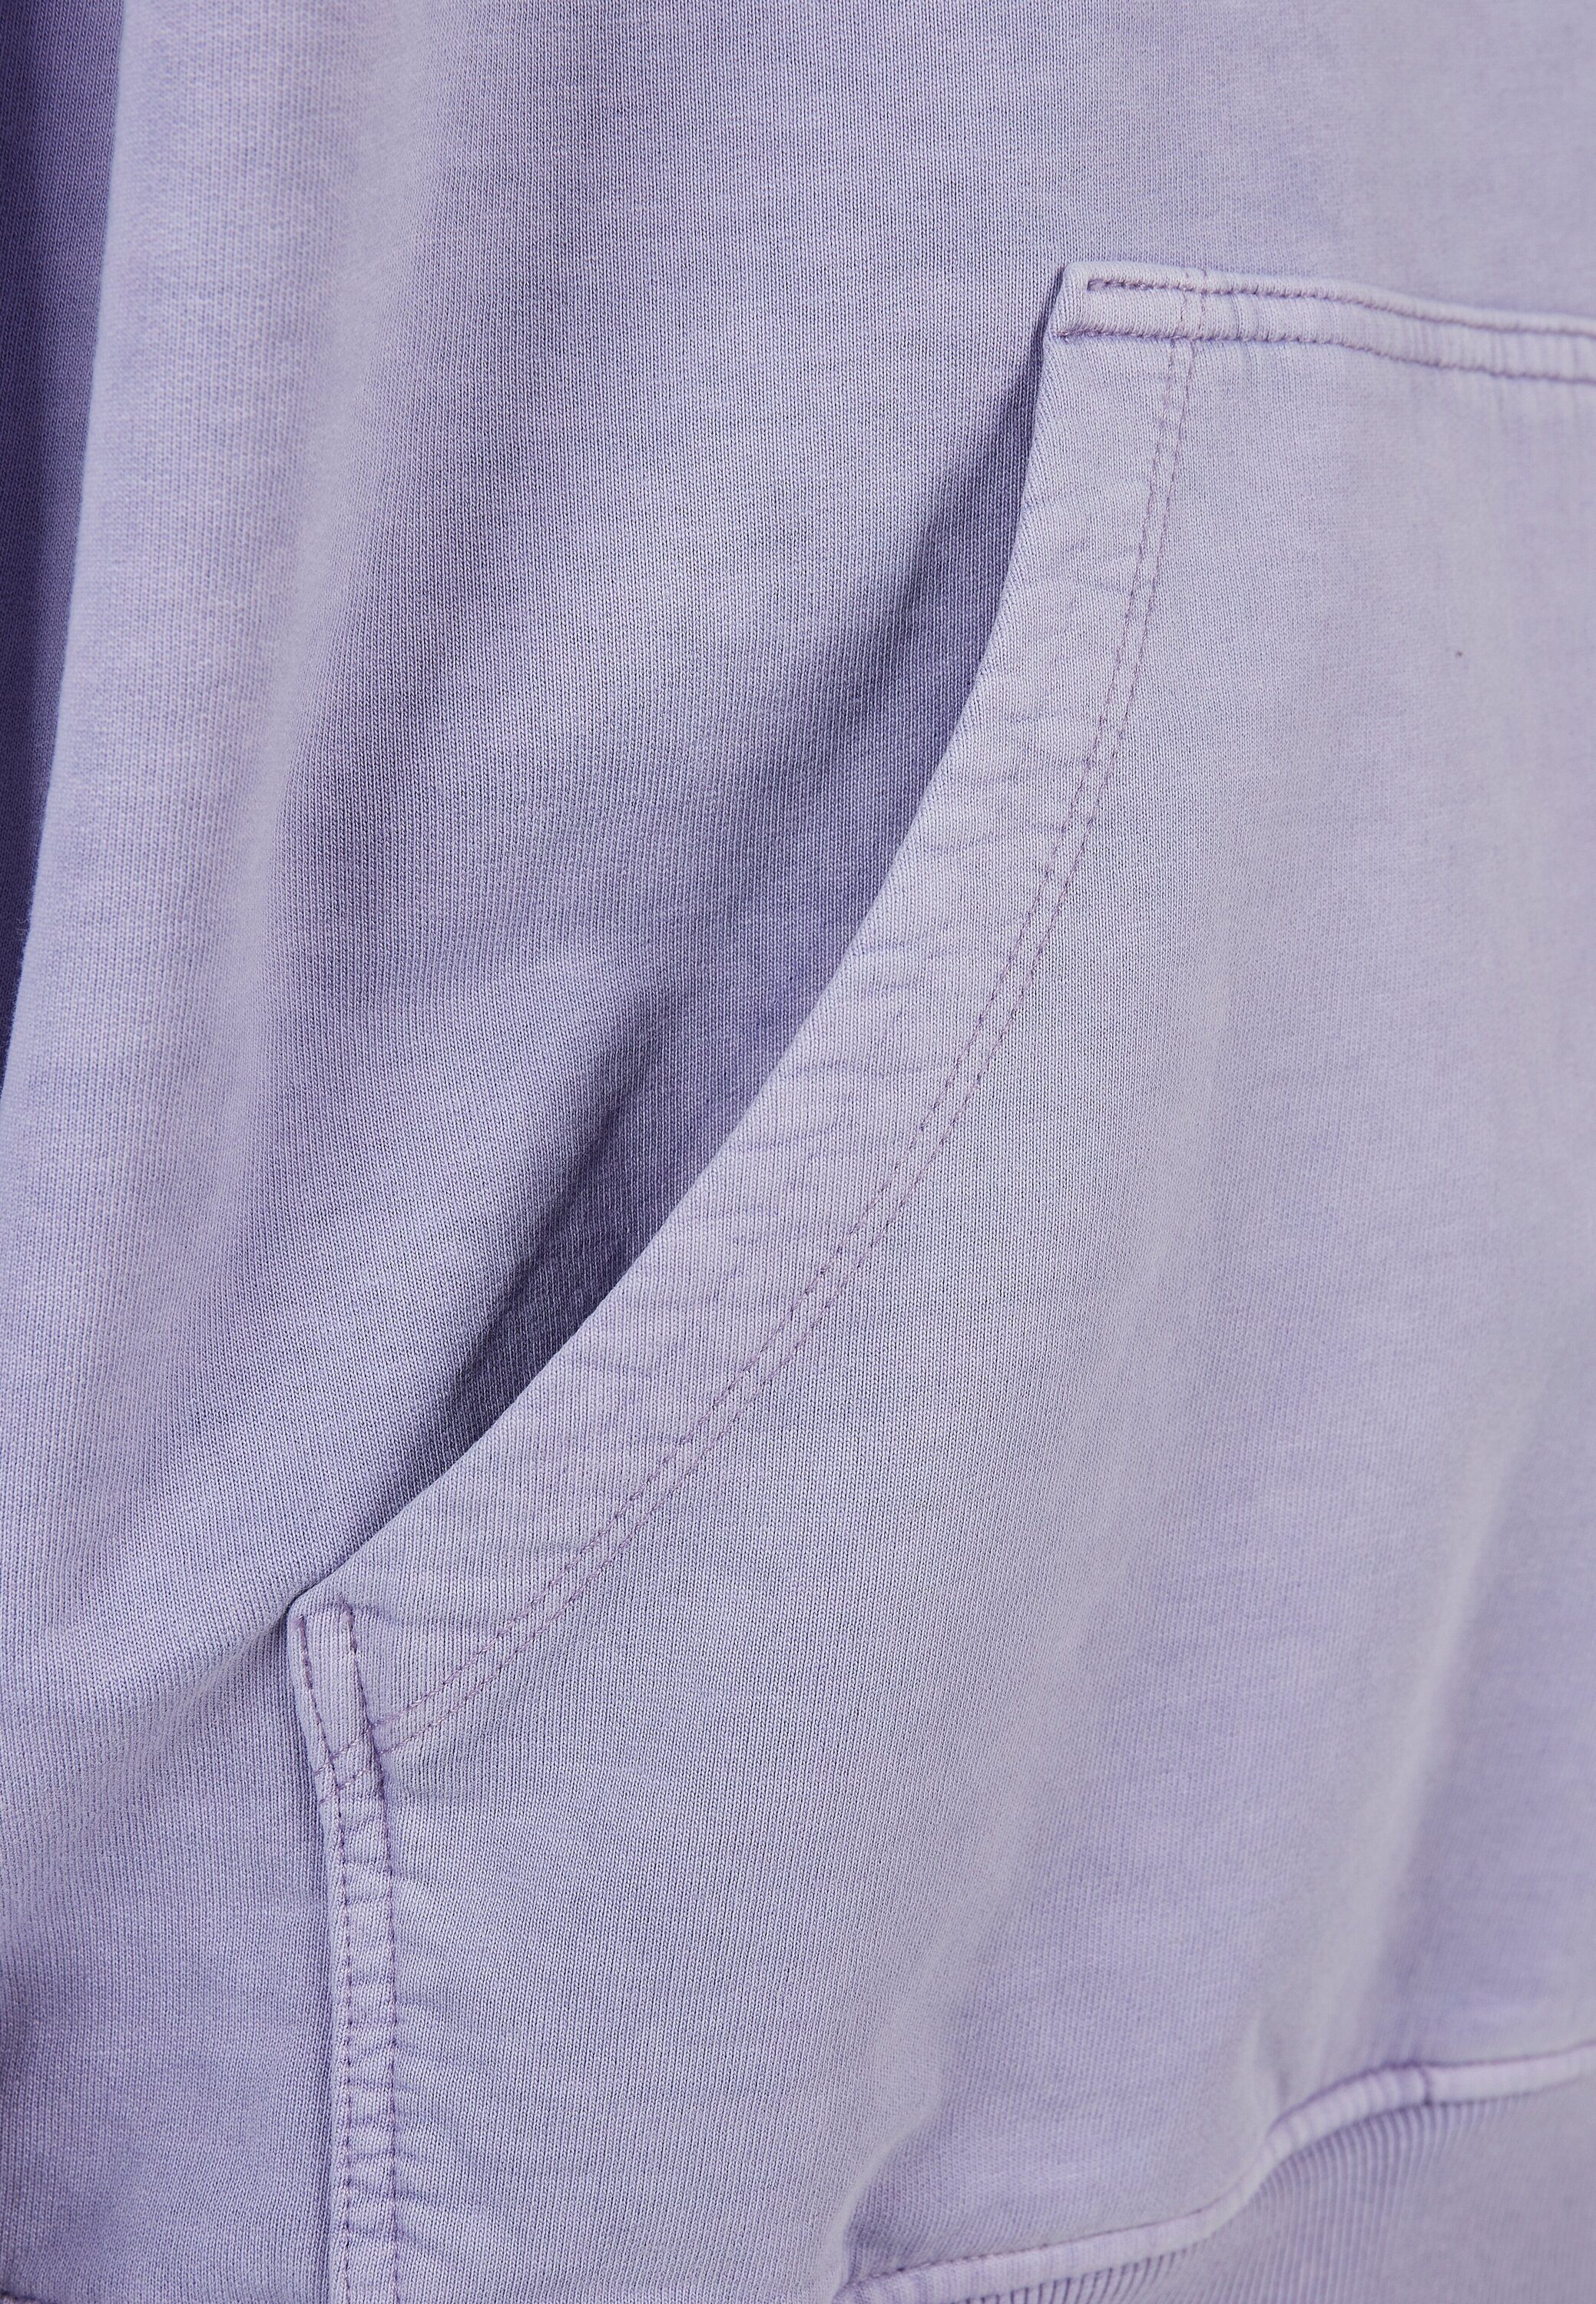 URBAN CLASSICS Sweater Overdyed lavender Hoody (1-tlg) Herren